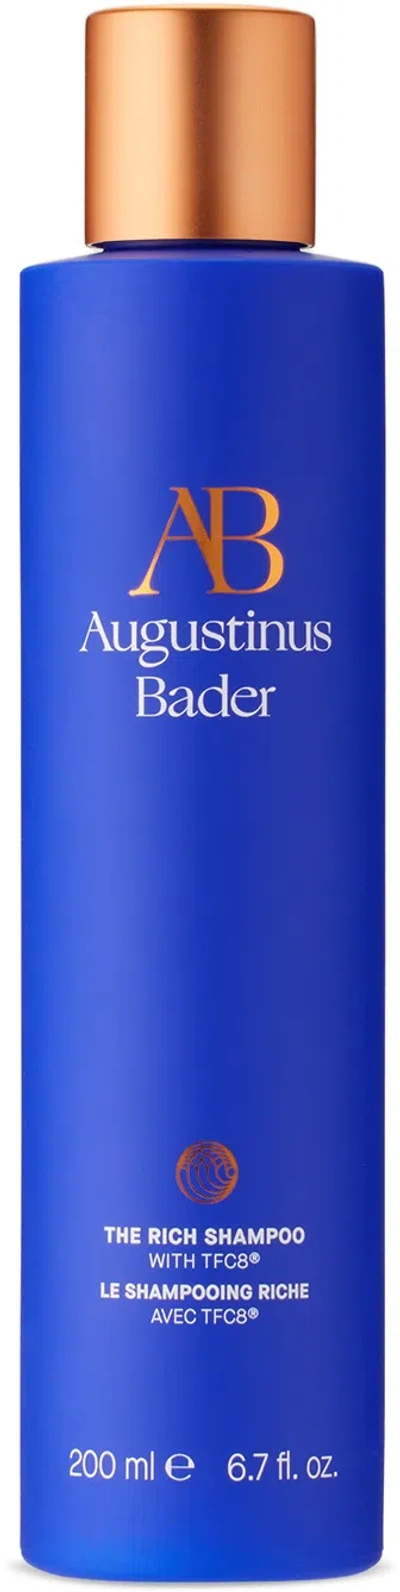 Augustinus Bader The Rich Shampoo, 200 ml In White